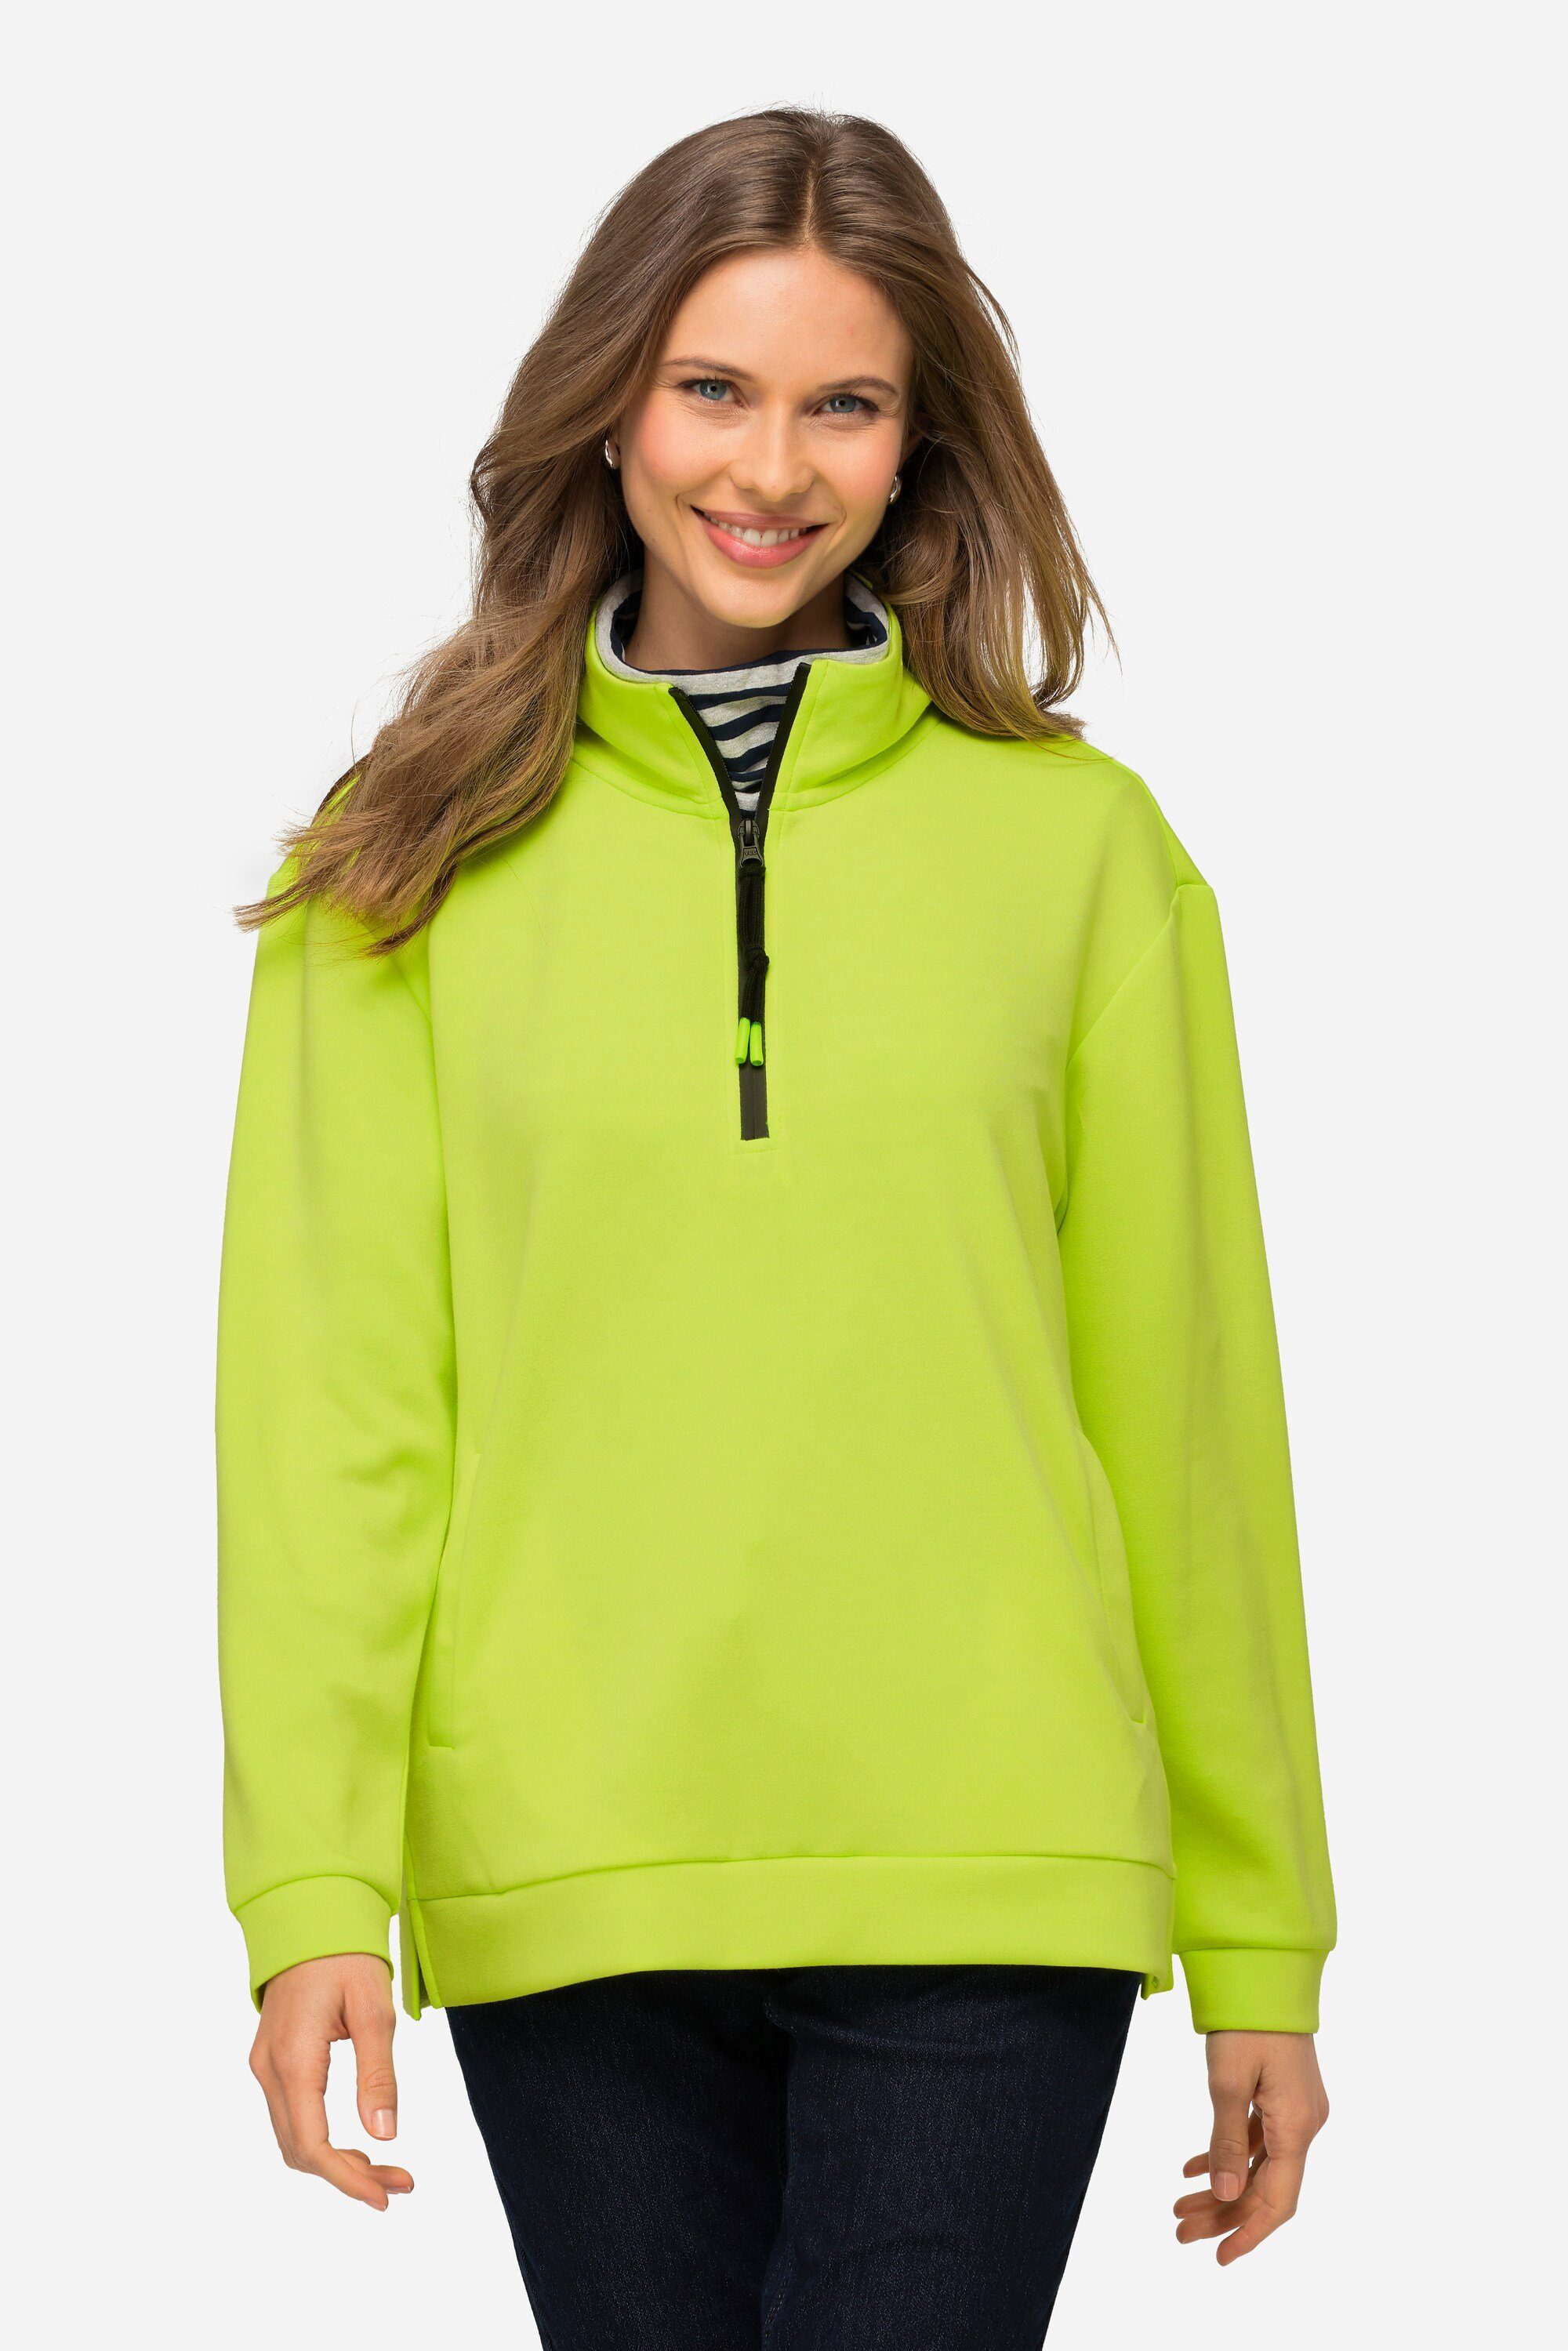 Laurasøn Sweatshirt Sweatshirt Troyerkragen Langarm Seitenschlitze neon gelb